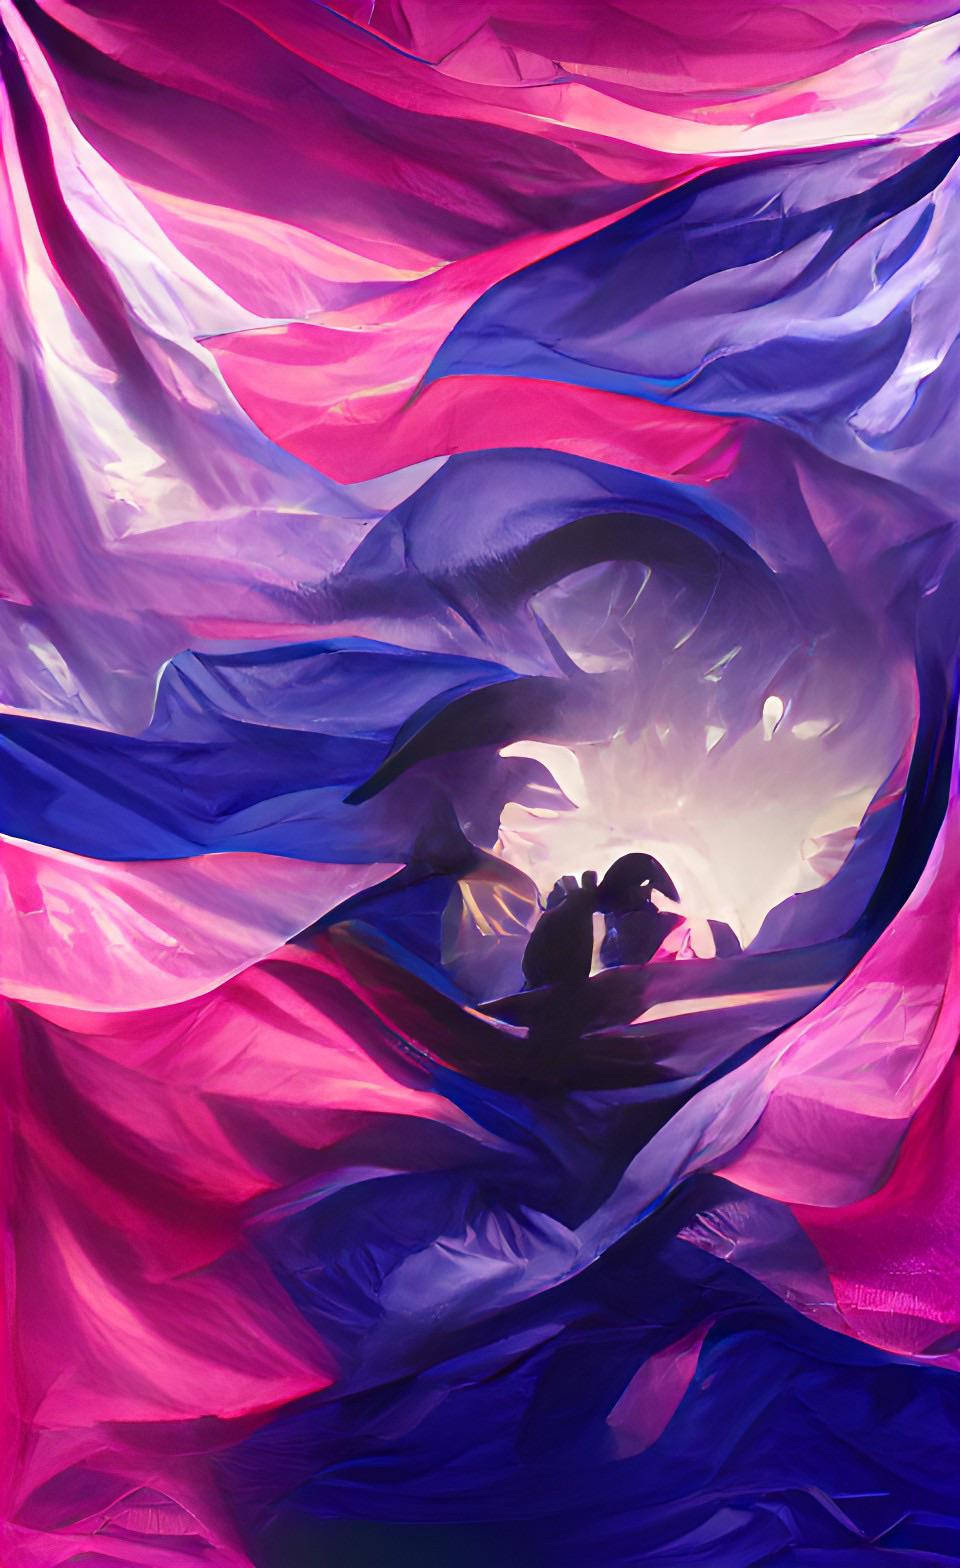 Bisexual Flag Painting Wallpaper